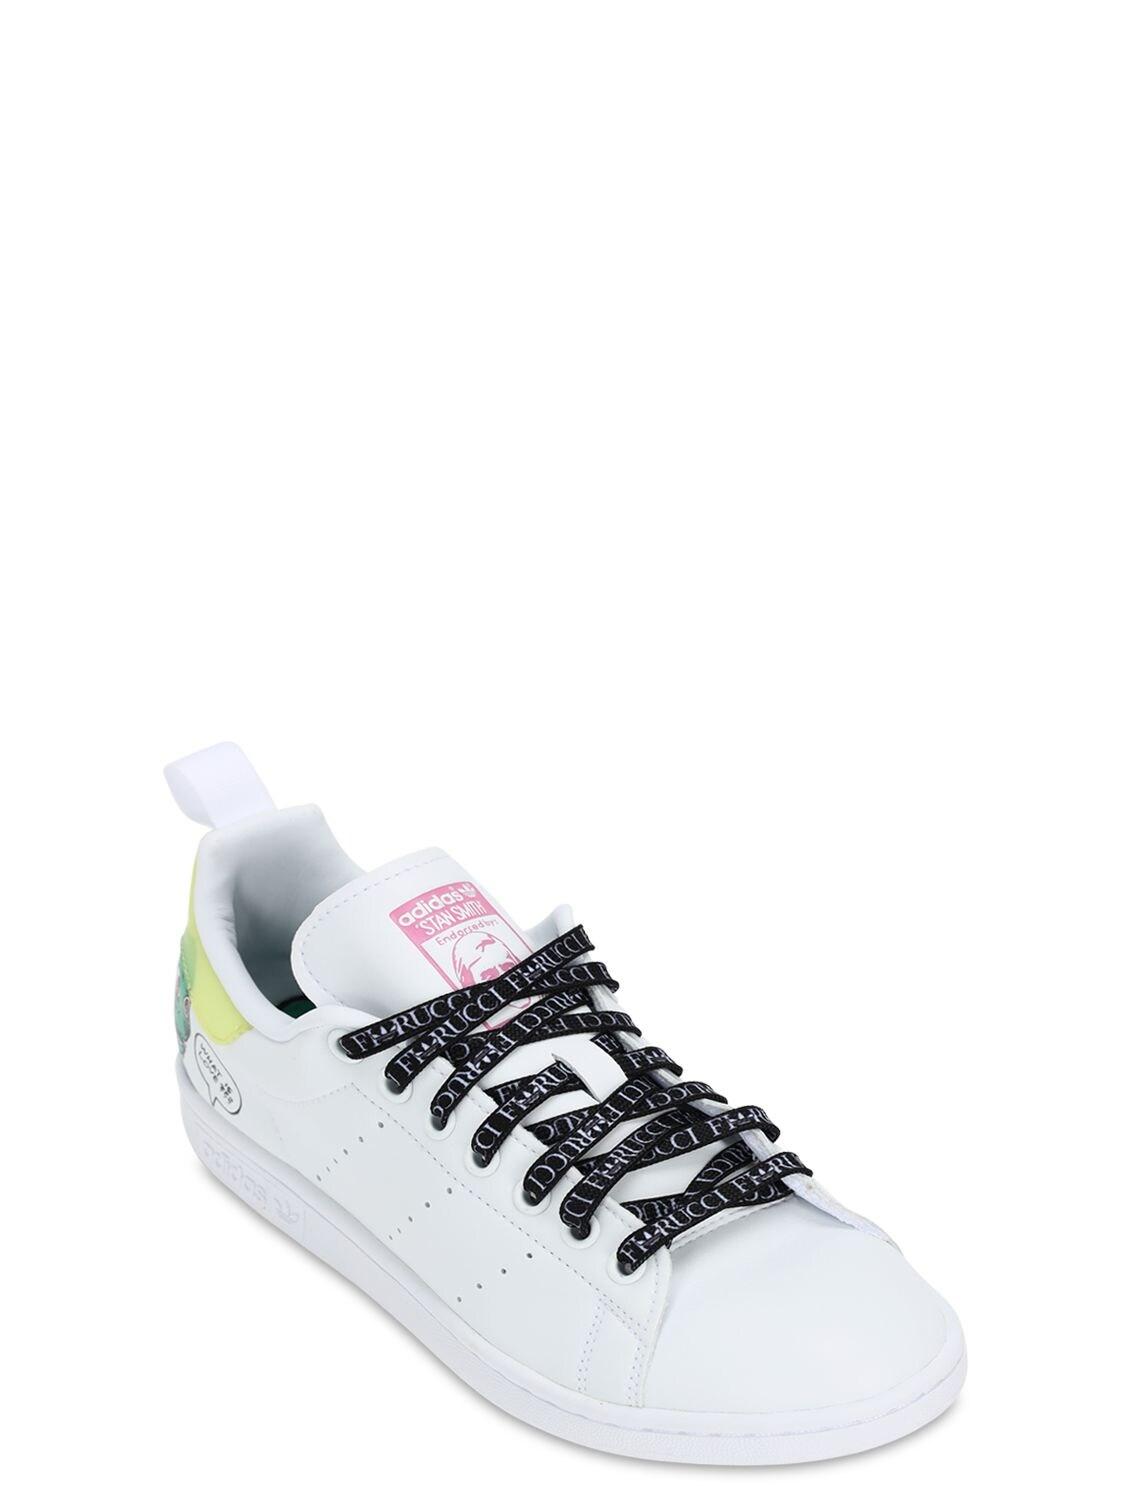 adidas Originals Fiorucci Stan Smith Printed Sneakers in White | Lyst